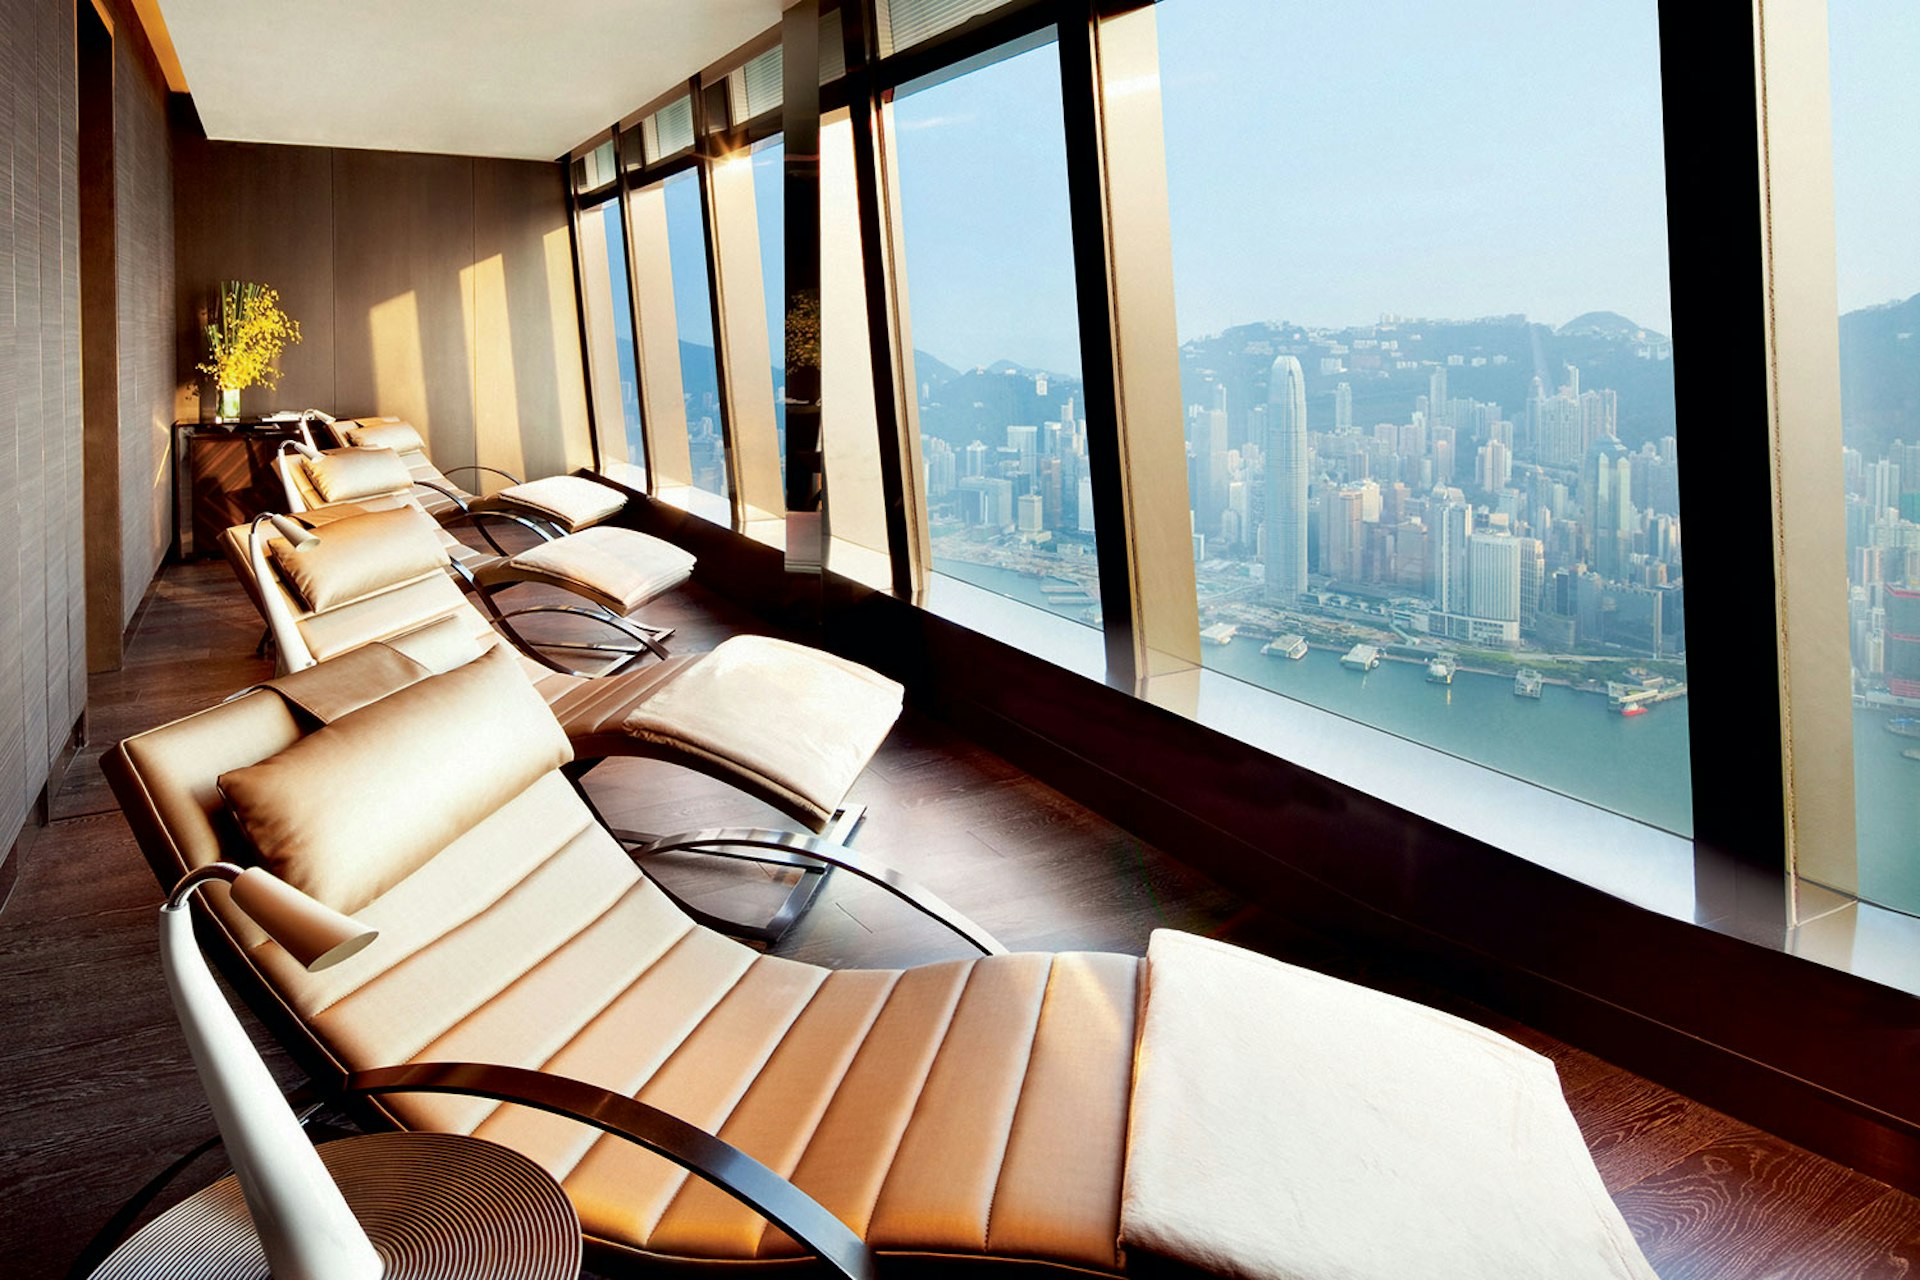 Spa at the Ritz-Carlton, Hong Kong. Image by Christopher Cypert; courtesy of the Ritz-Carlton Hotel Company